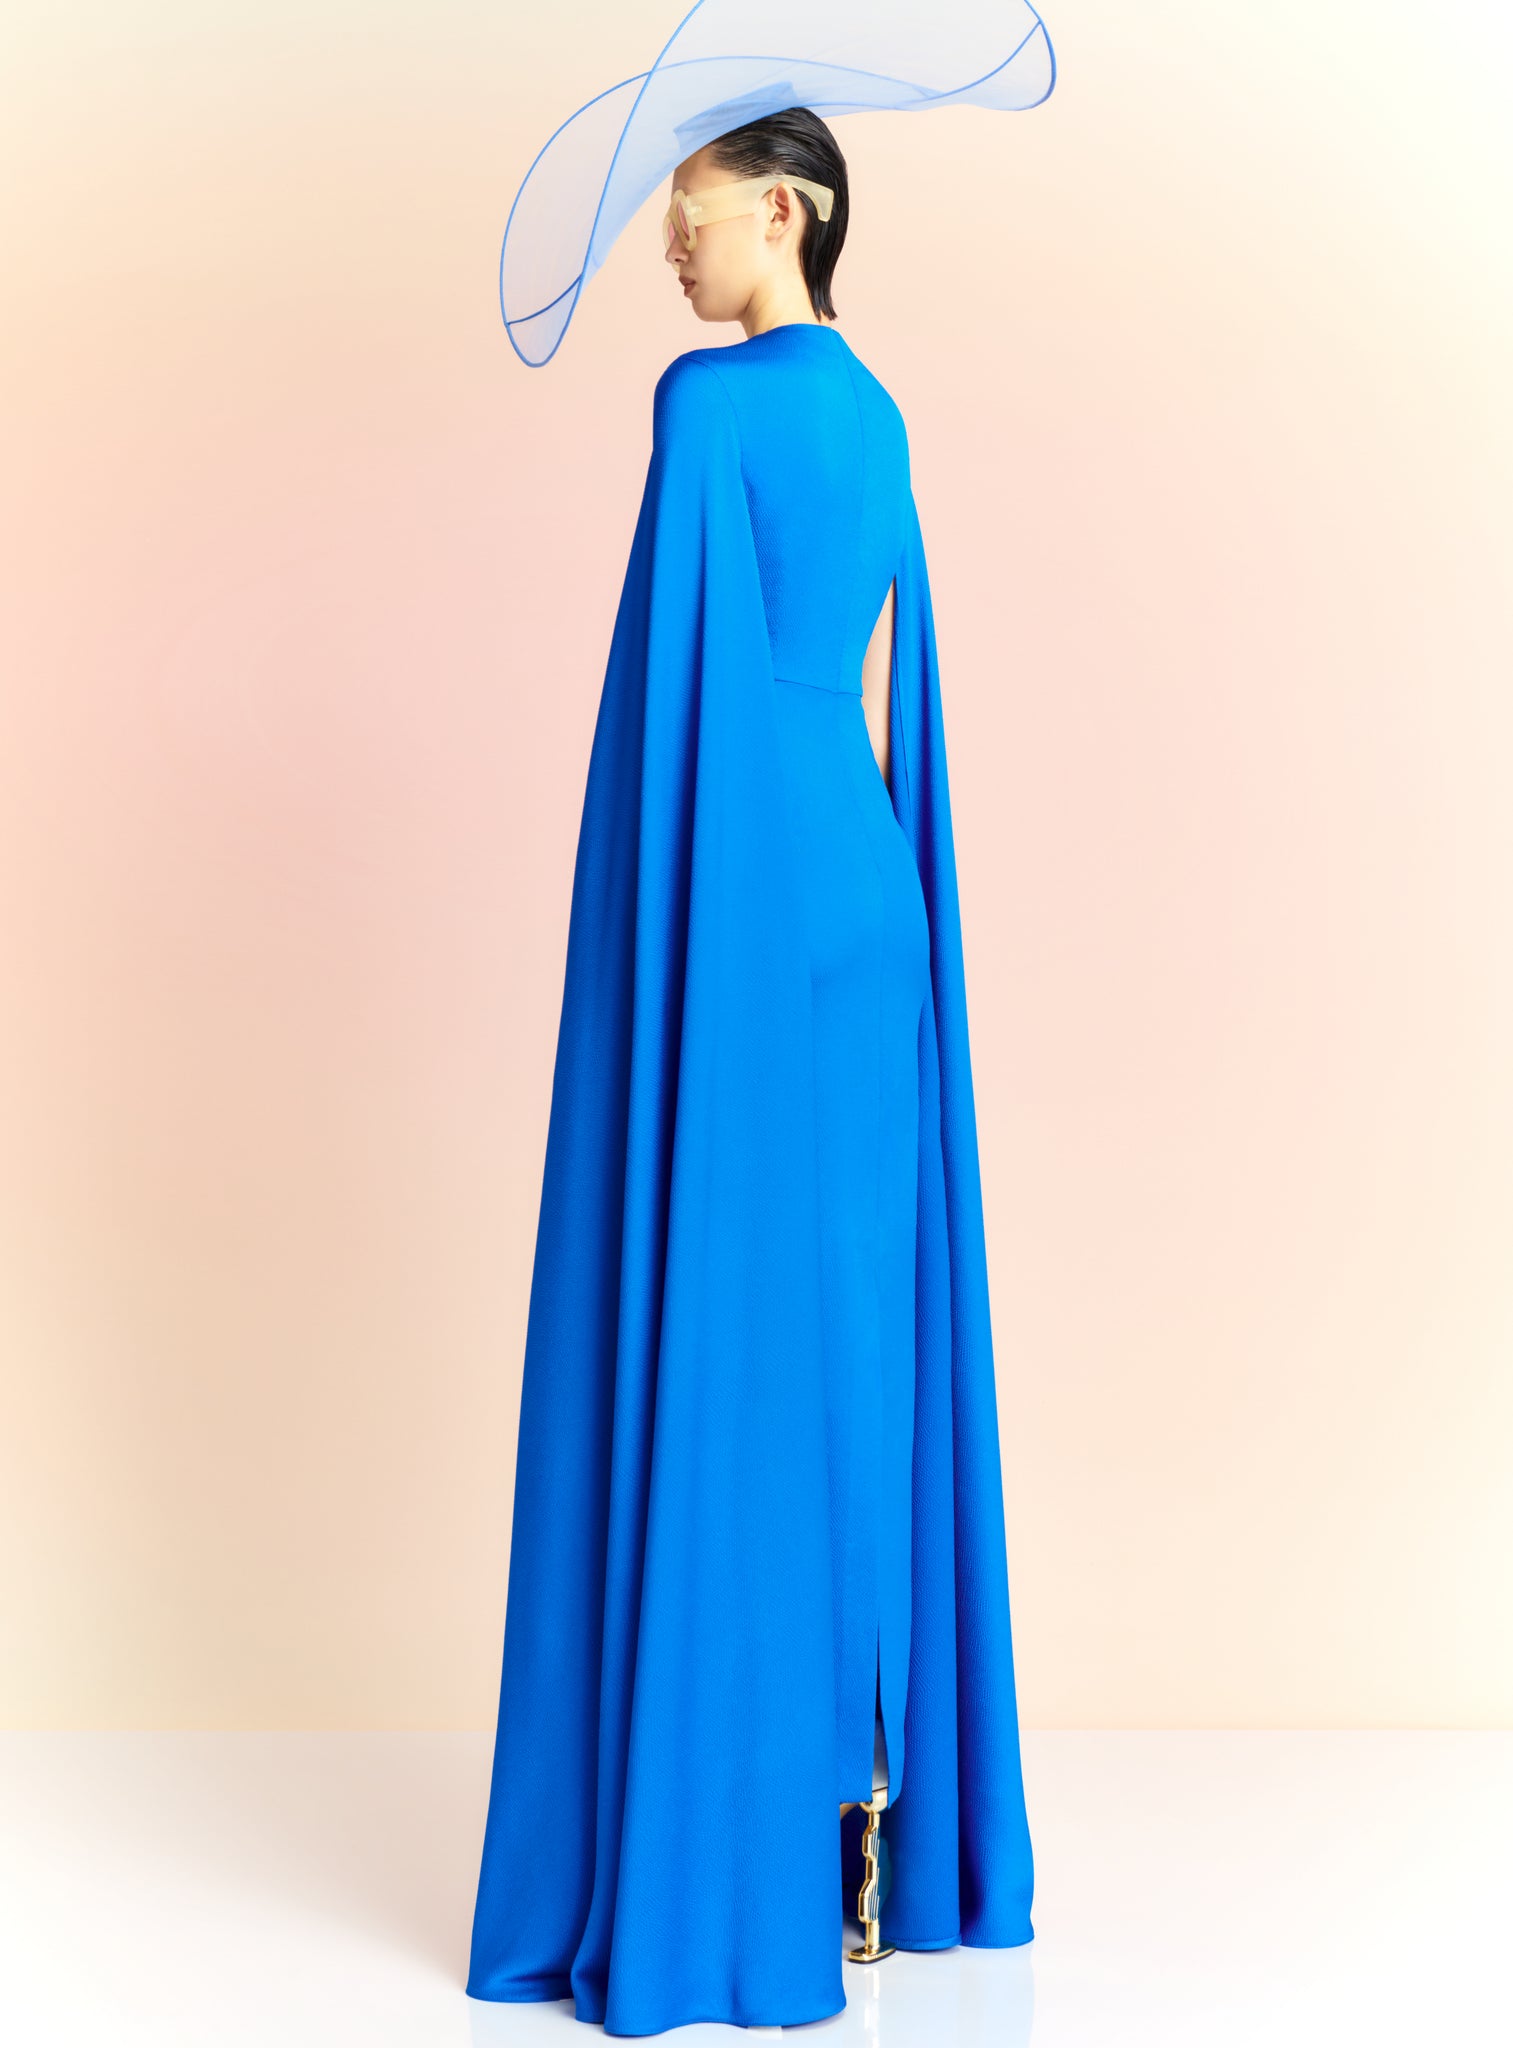 The Elya Maxi Dress in Blue